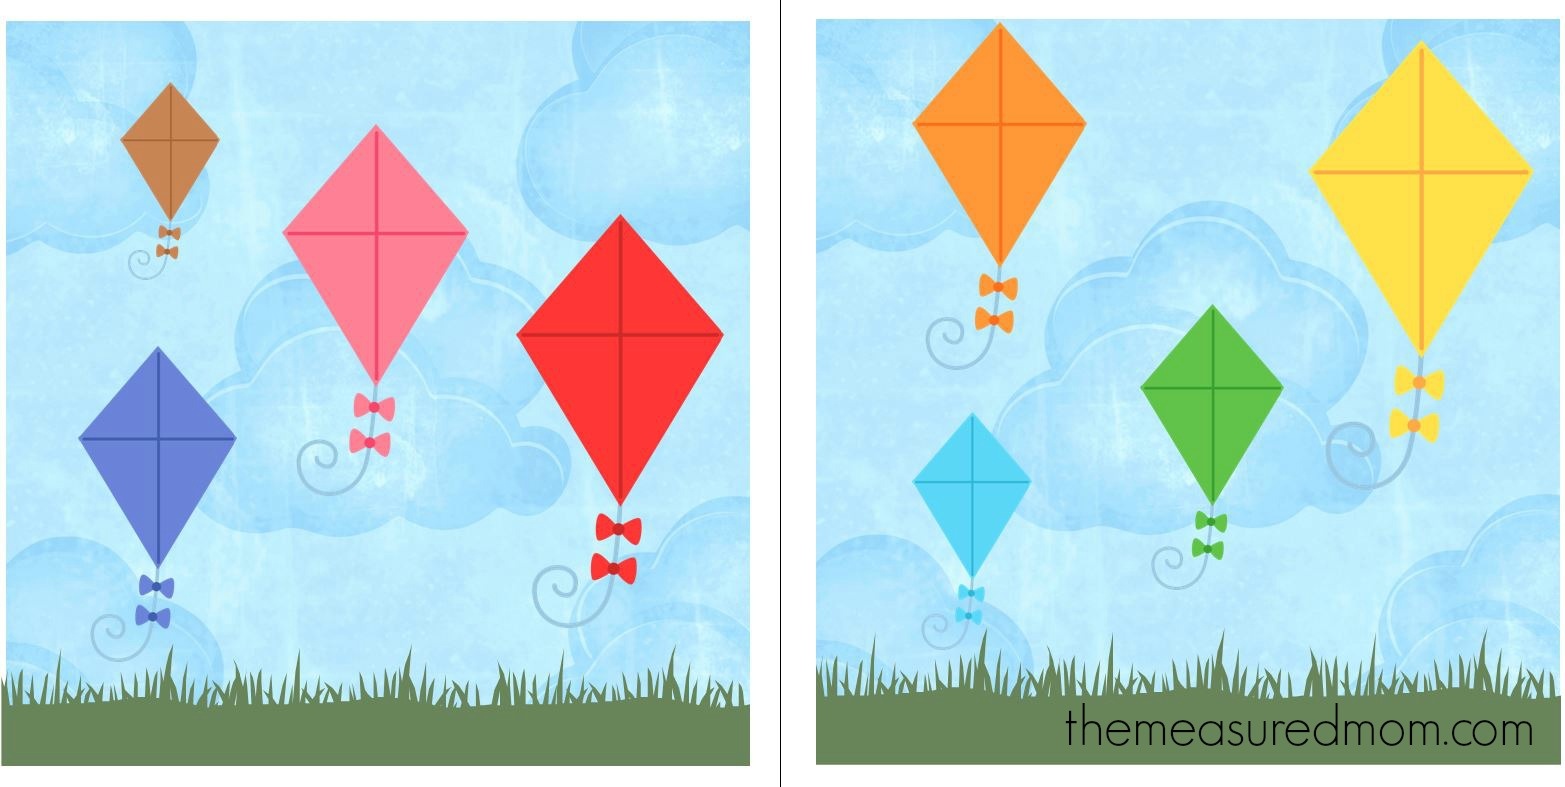 Free File Folder Game For Preschoolers: Kites! - The Measured Mom - File Folder Games For Toddlers Free Printable